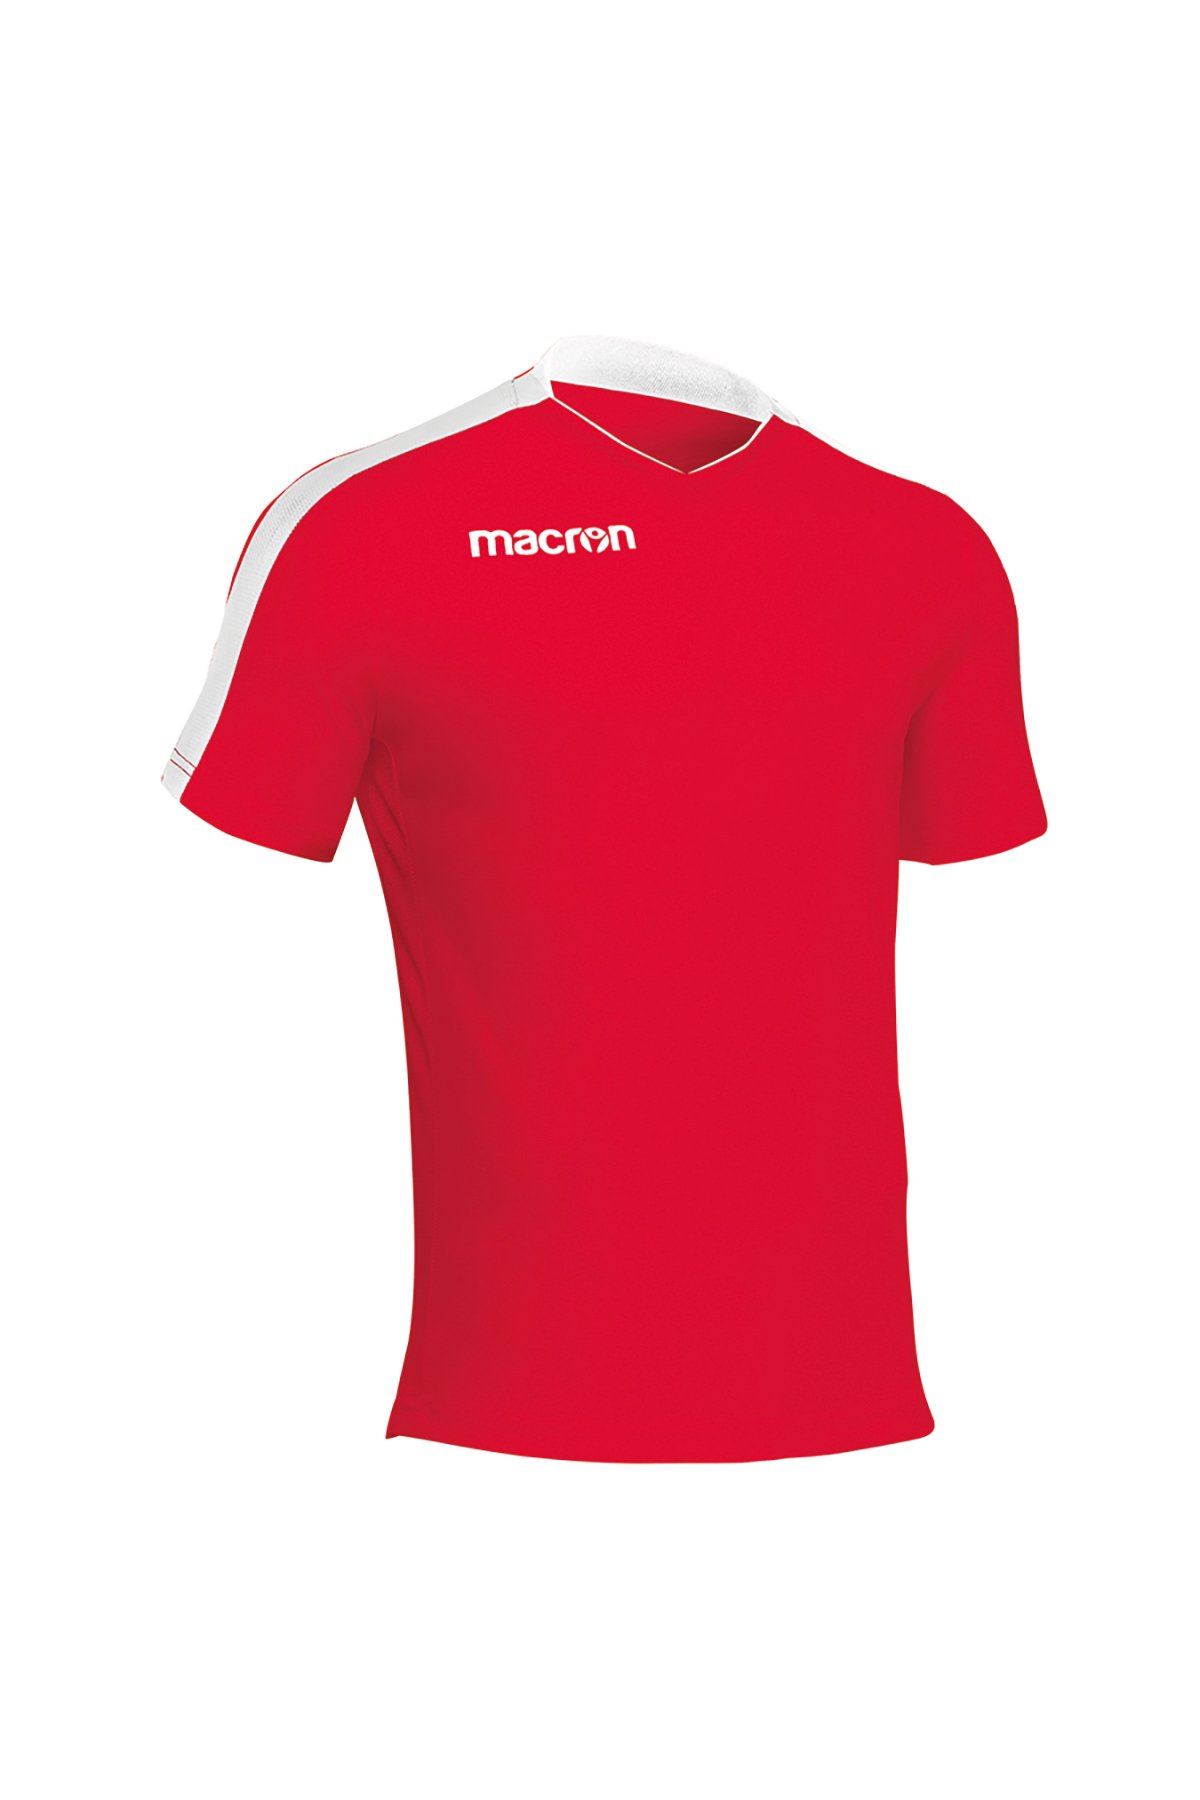 Macron Kırmızı Erkek T-Shirt 50570201 - 2